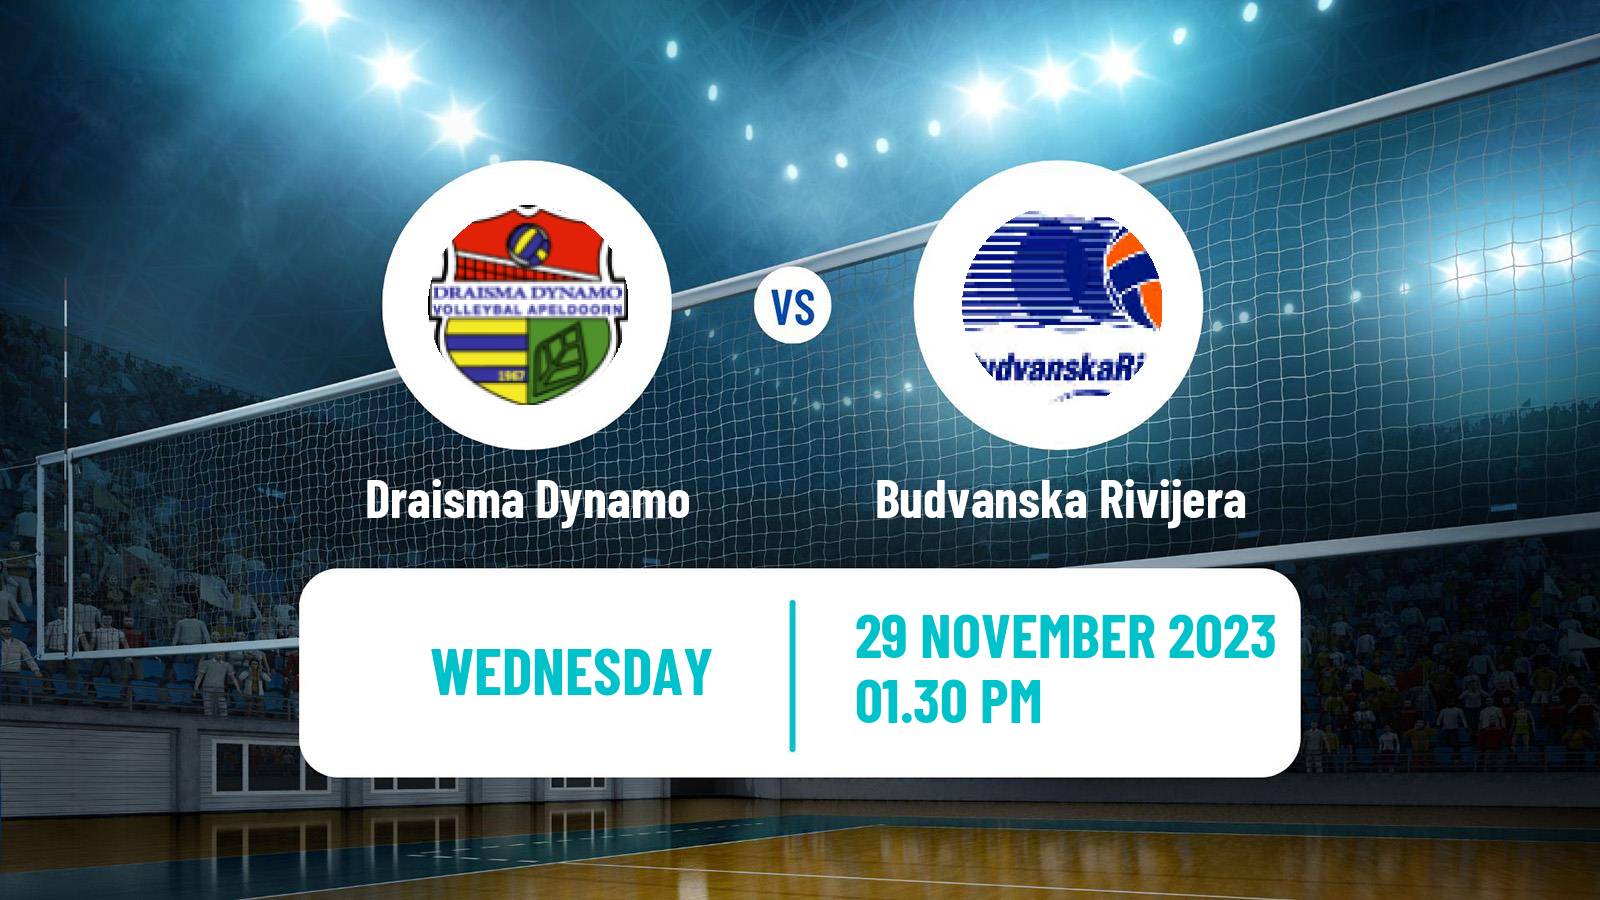 Volleyball CEV Cup Draisma Dynamo - Budvanska Rivijera